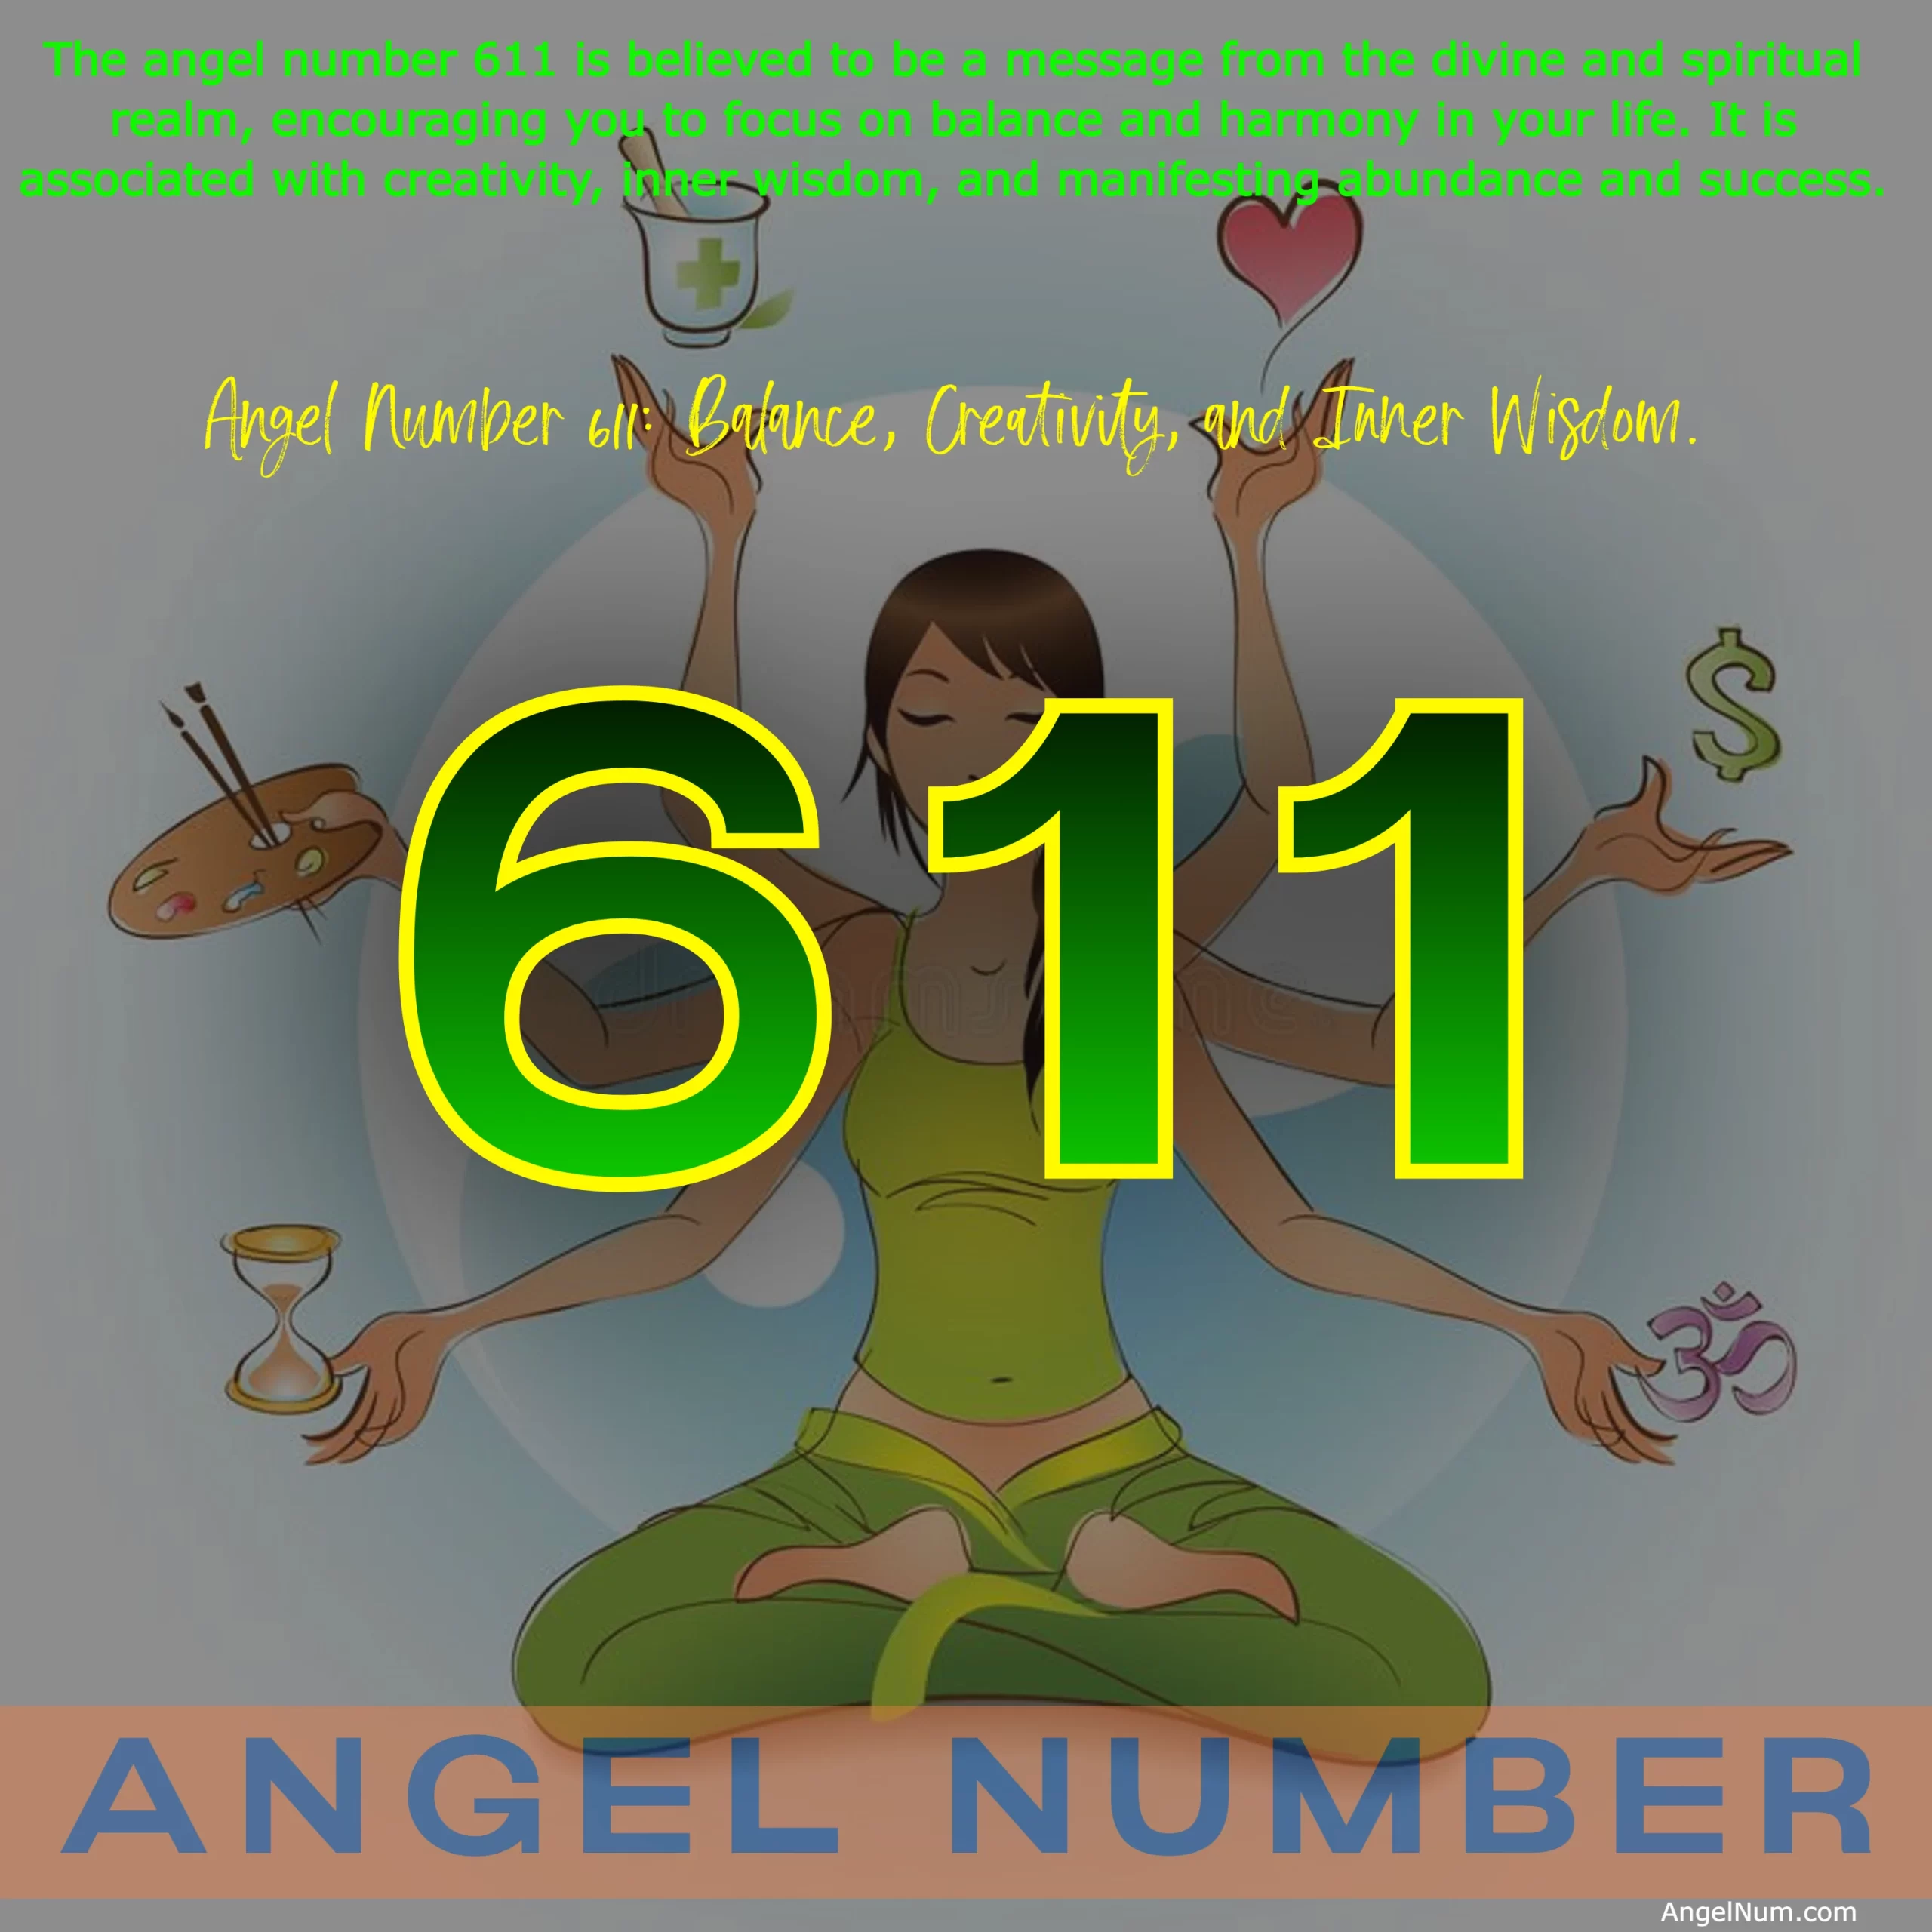 Angel Number 611: Balance, Creativity, and Inner Wisdom.